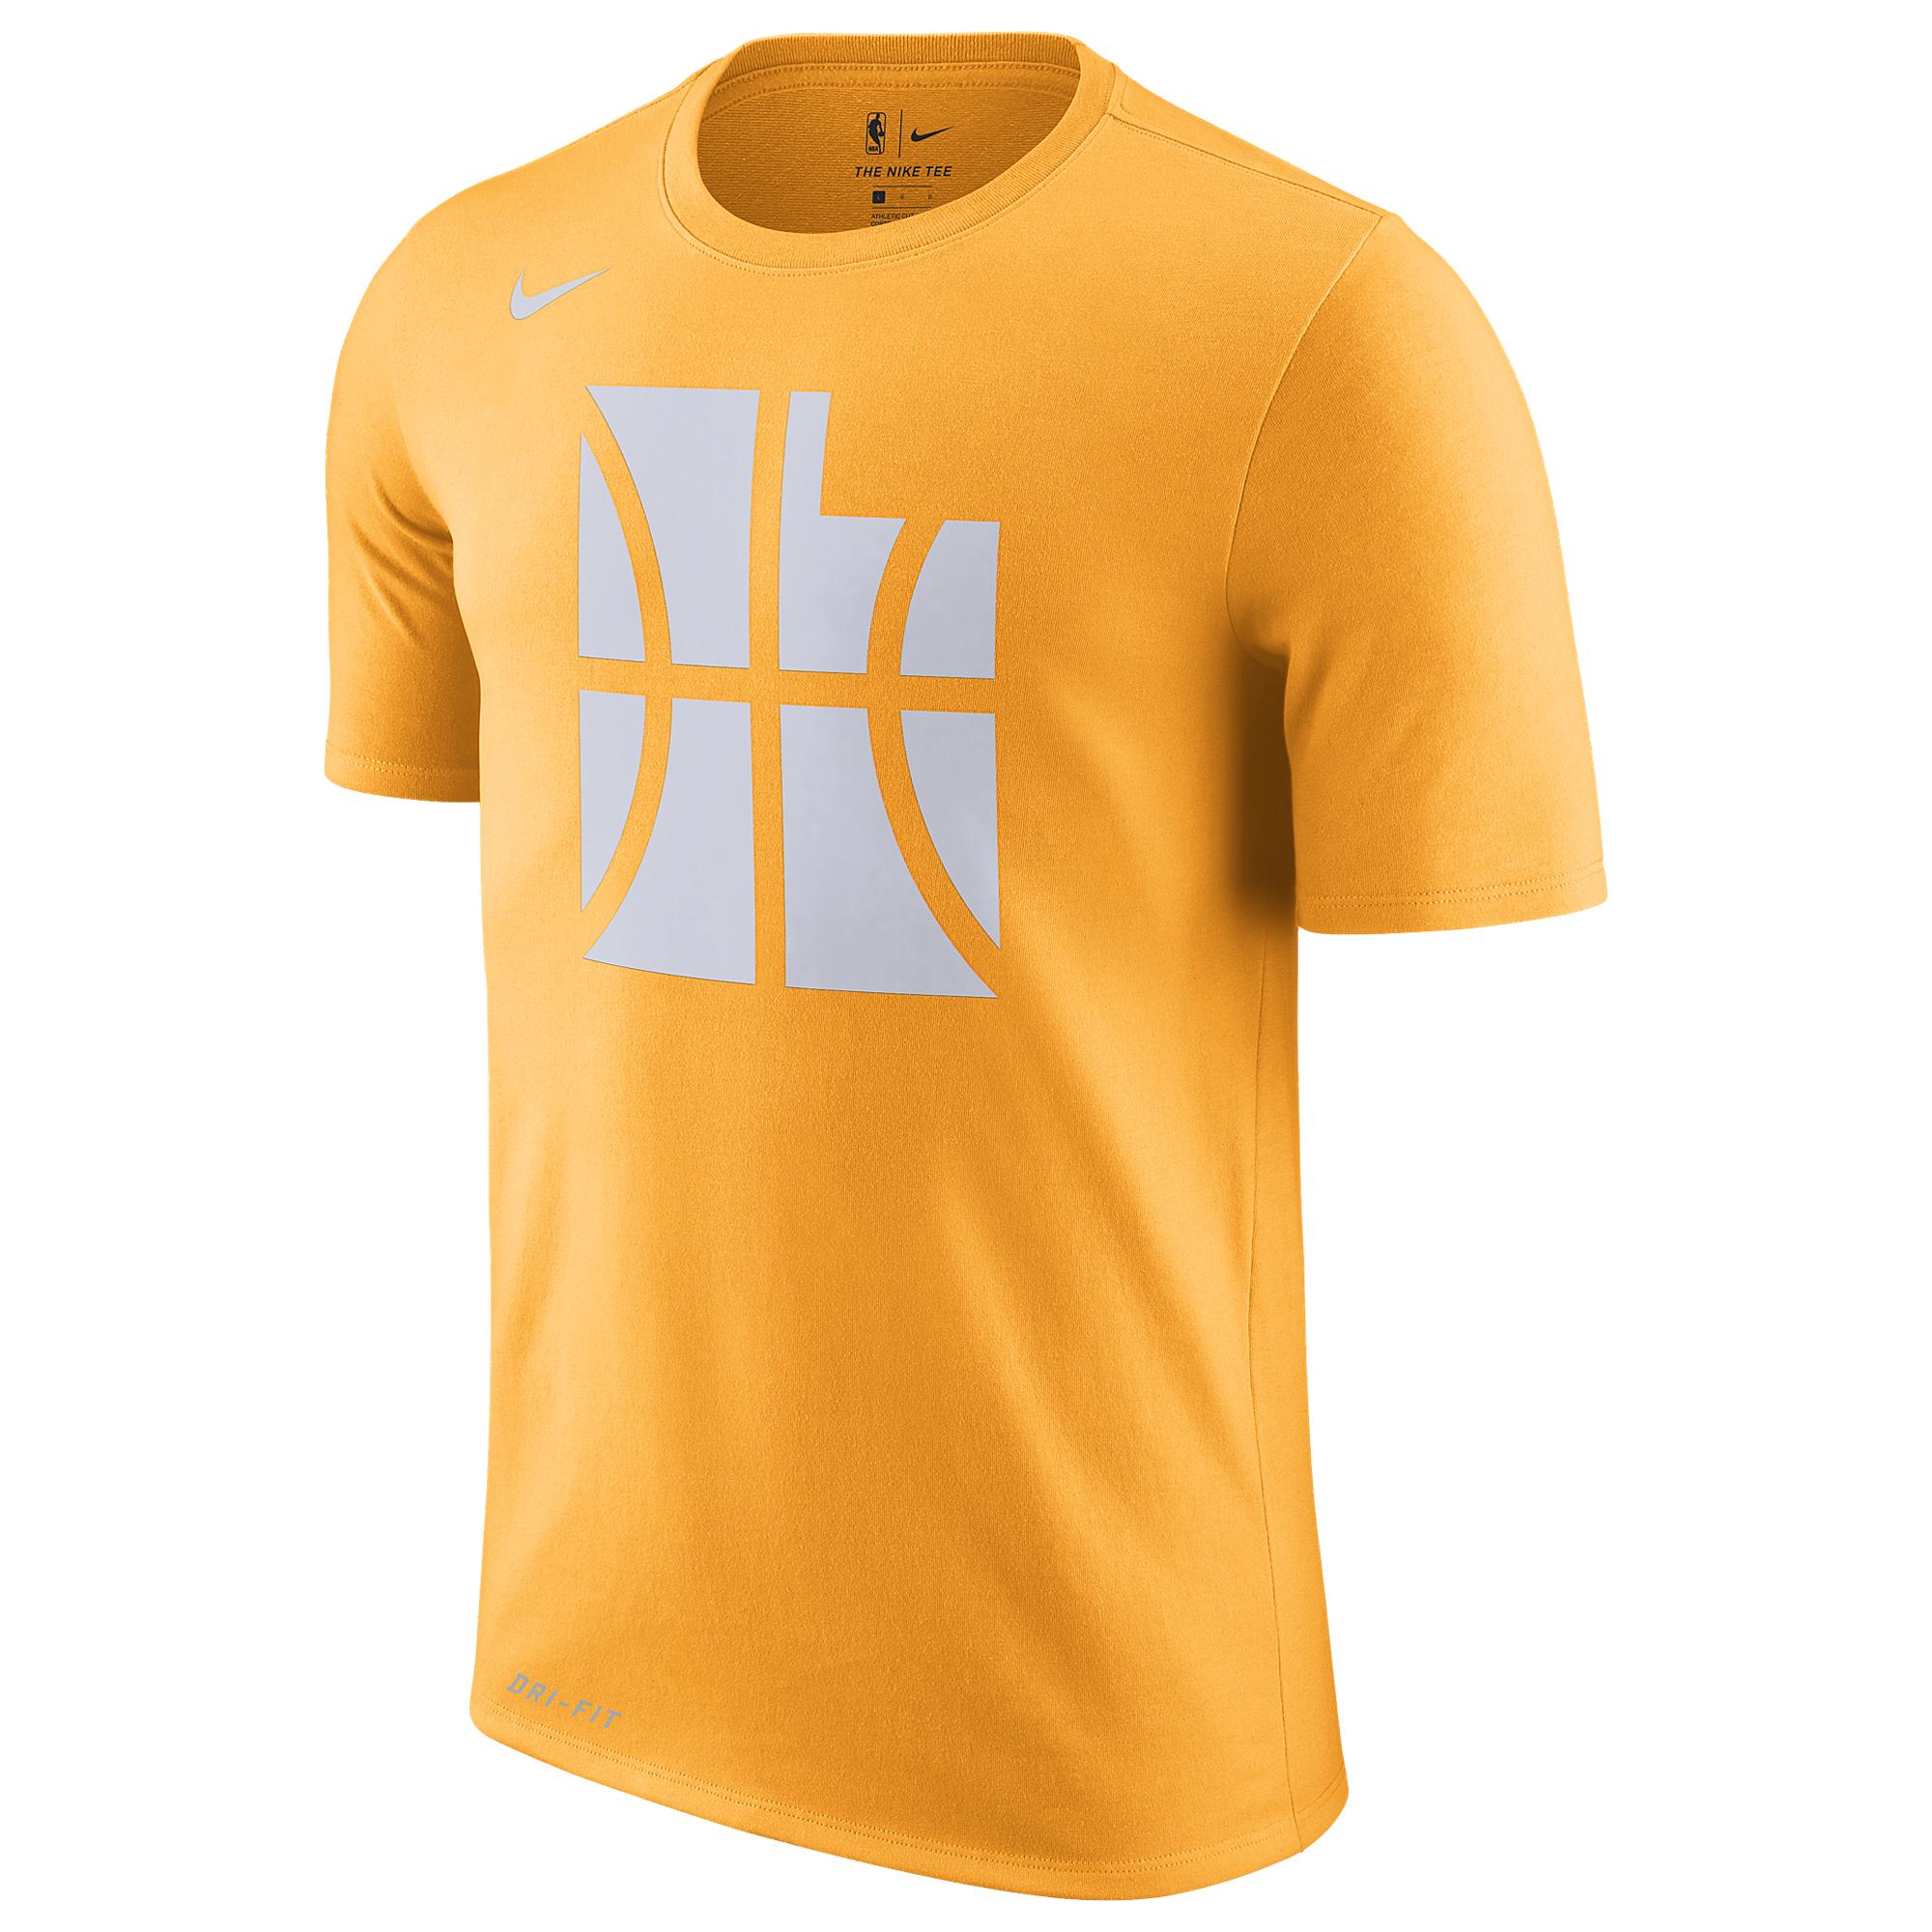 Nike Utah Jazz Nba City Edition Dry T-shirt in Yellow for Men - Lyst